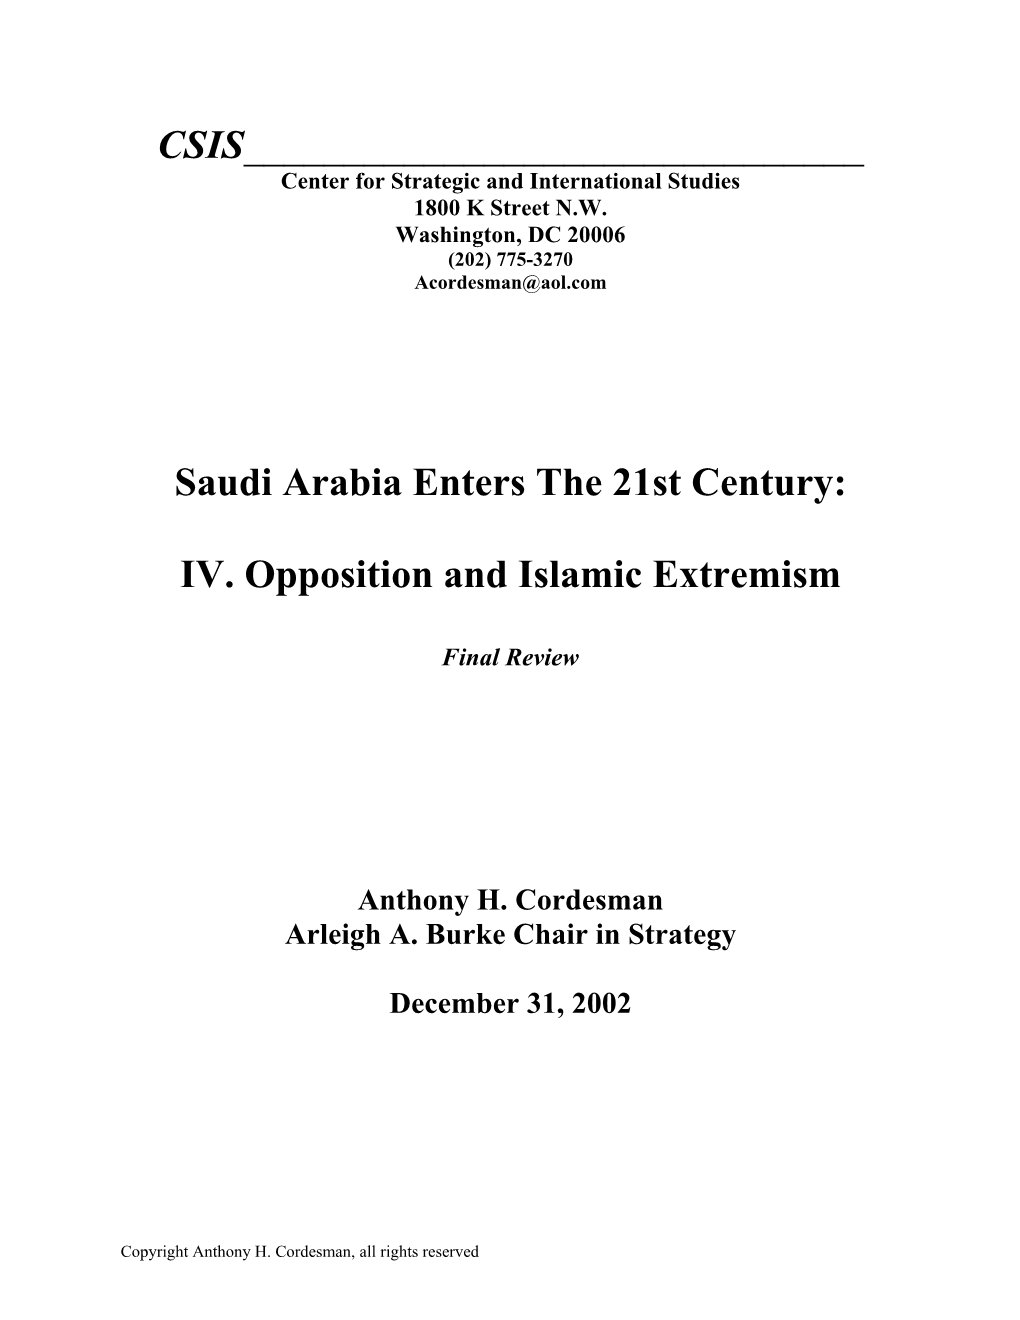 Saudi Arabia Enters the 21St Century Part IV